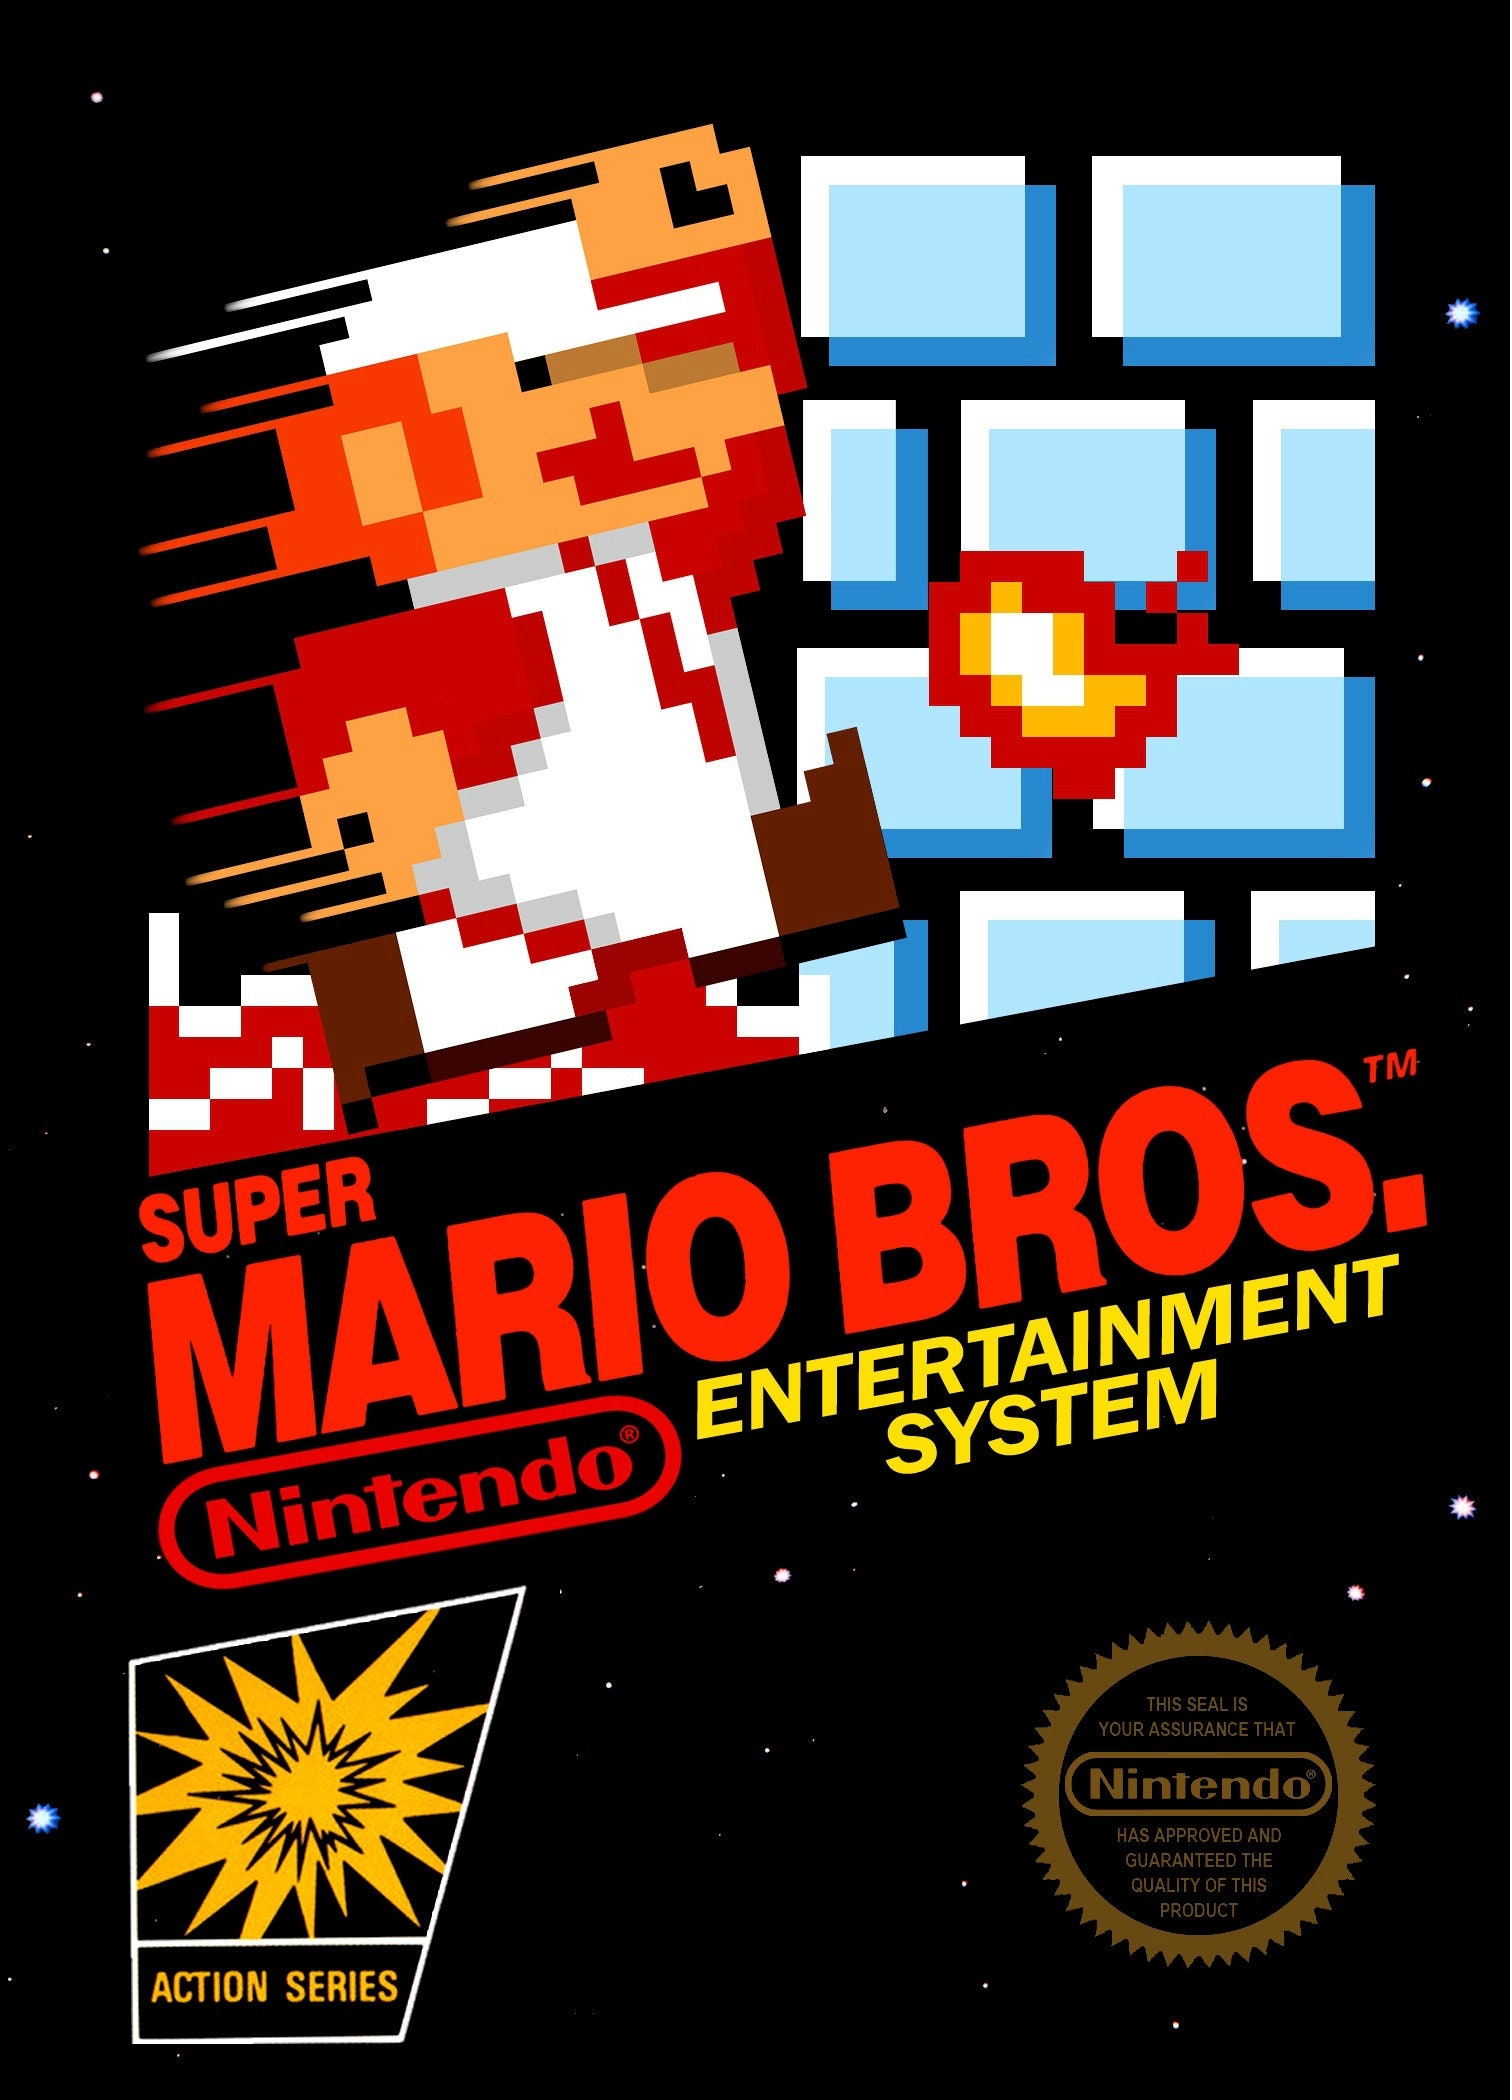 Super Mario Bros 1 2 3 Nintendo NES Poster Size A3 / A4 Retro Gaming - Etsy